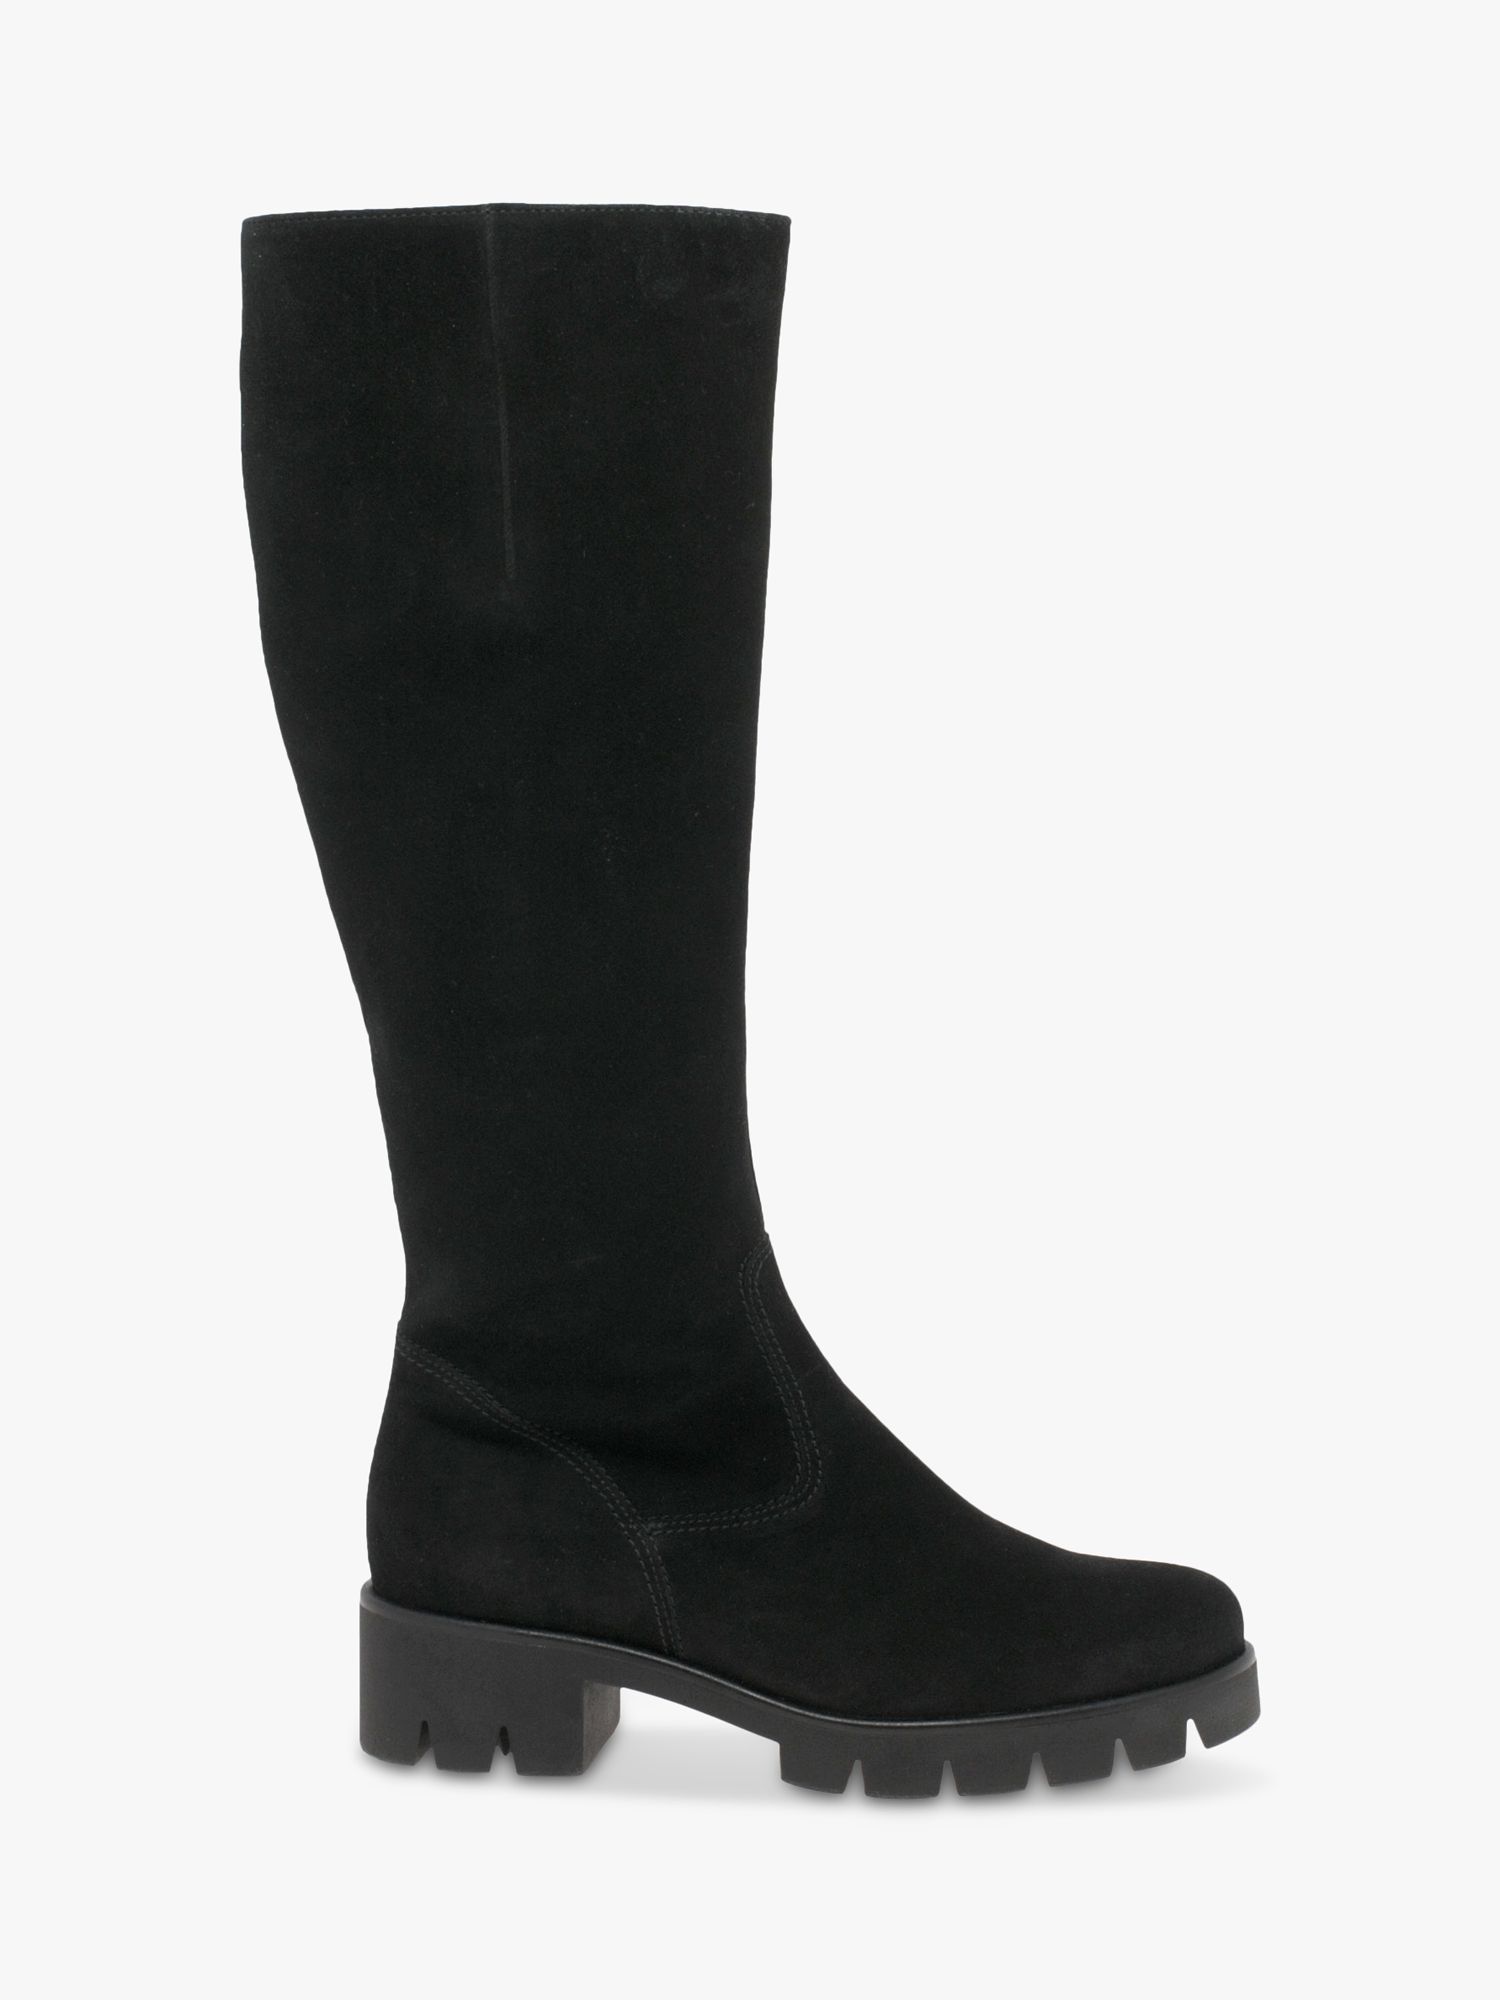 ladies calf length boots uk